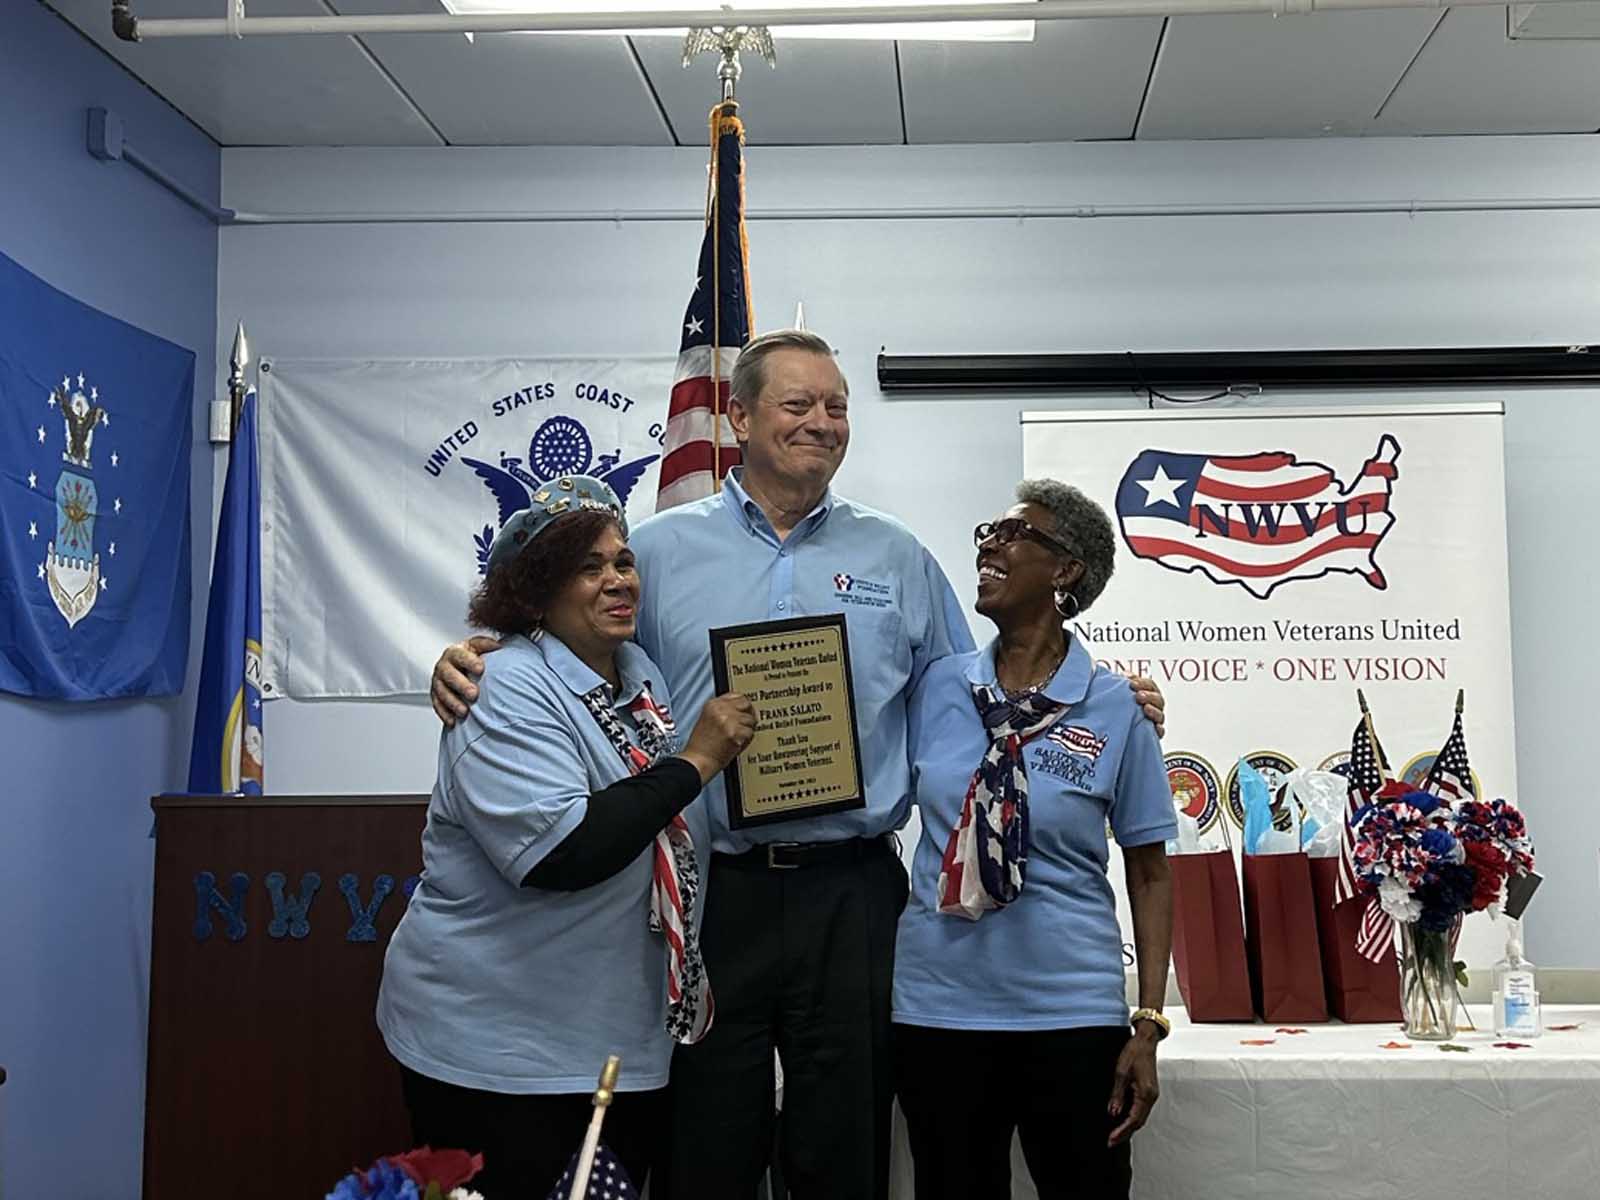 United Relief Foundation Frank Salato receiving National Women Veterans United award